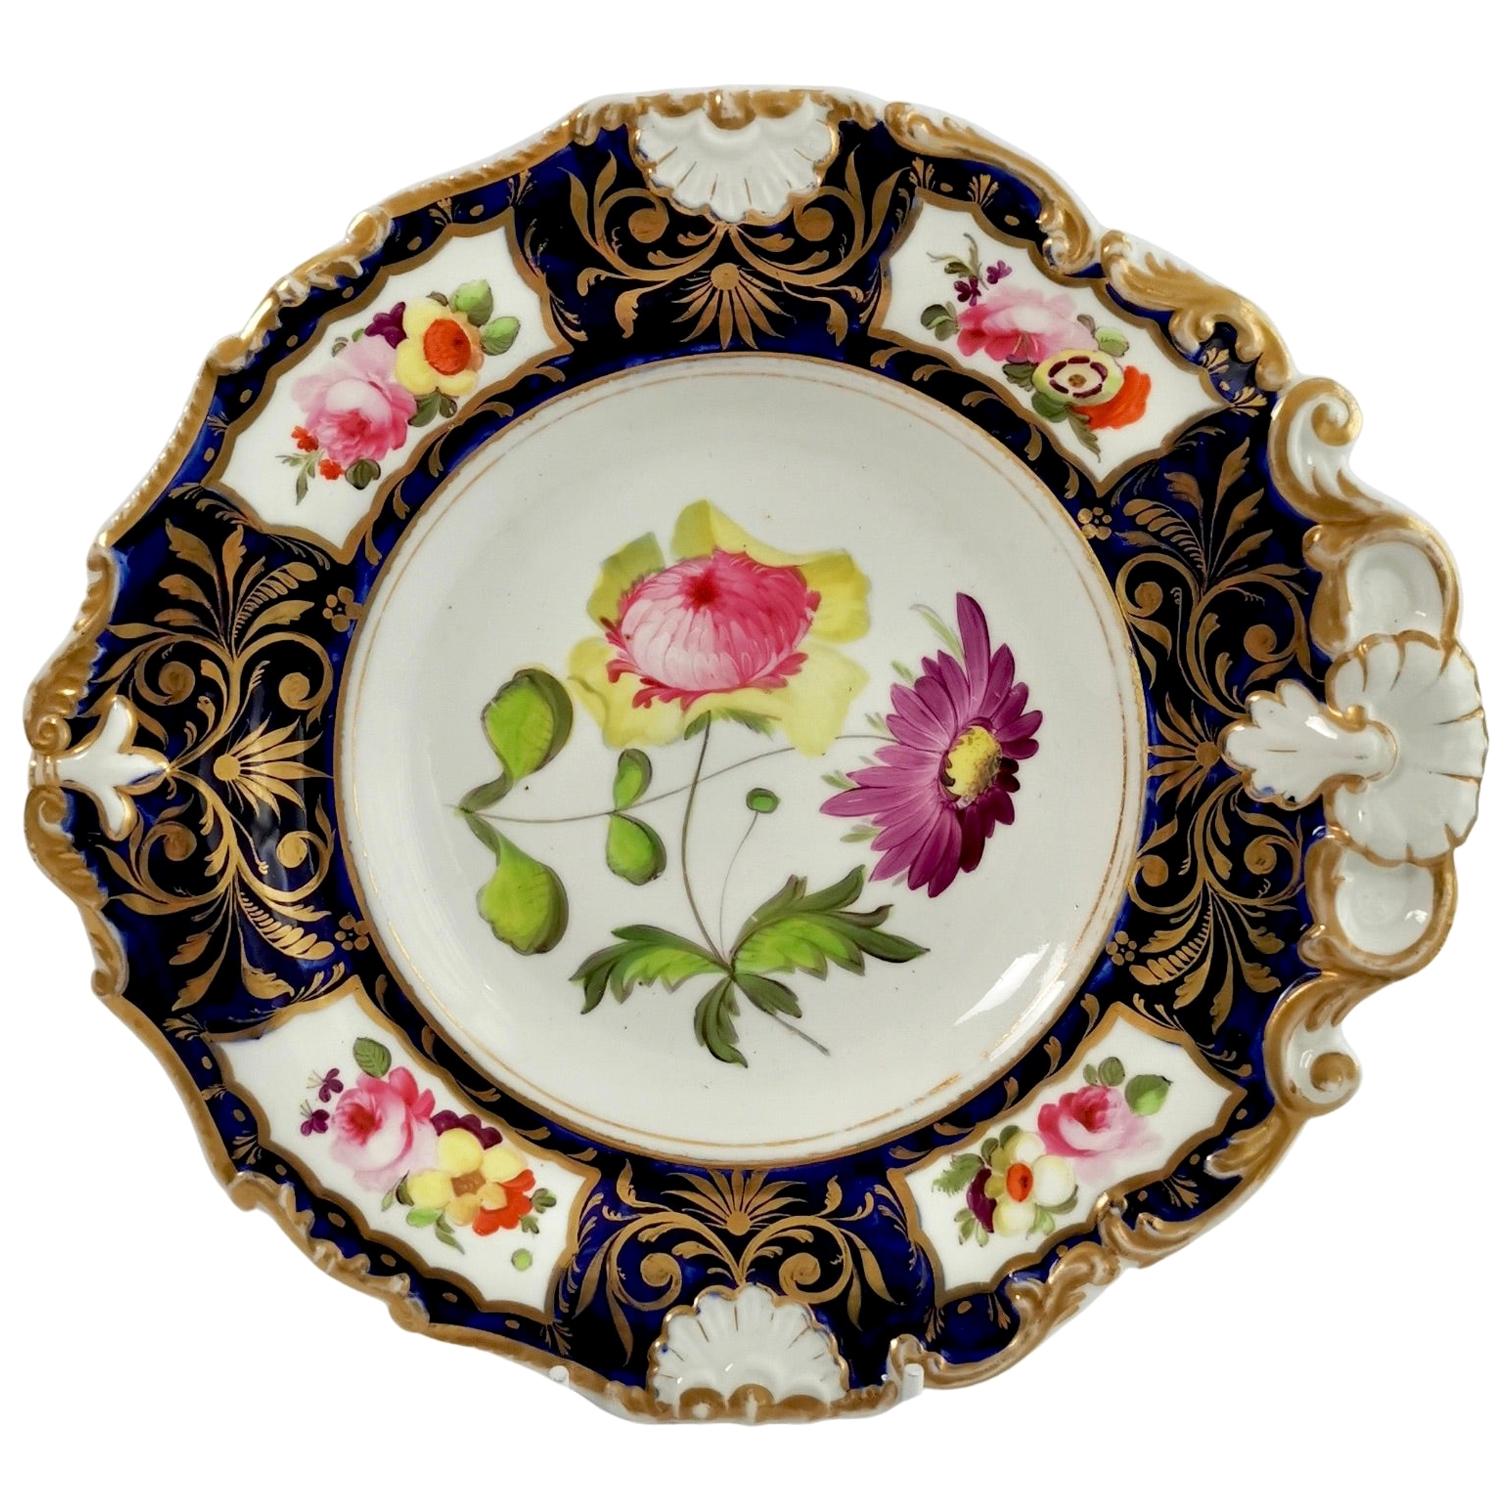 Machin Porcelain Plate, Cobalt Blue, Gilt and Flowers, Regency, circa 1820